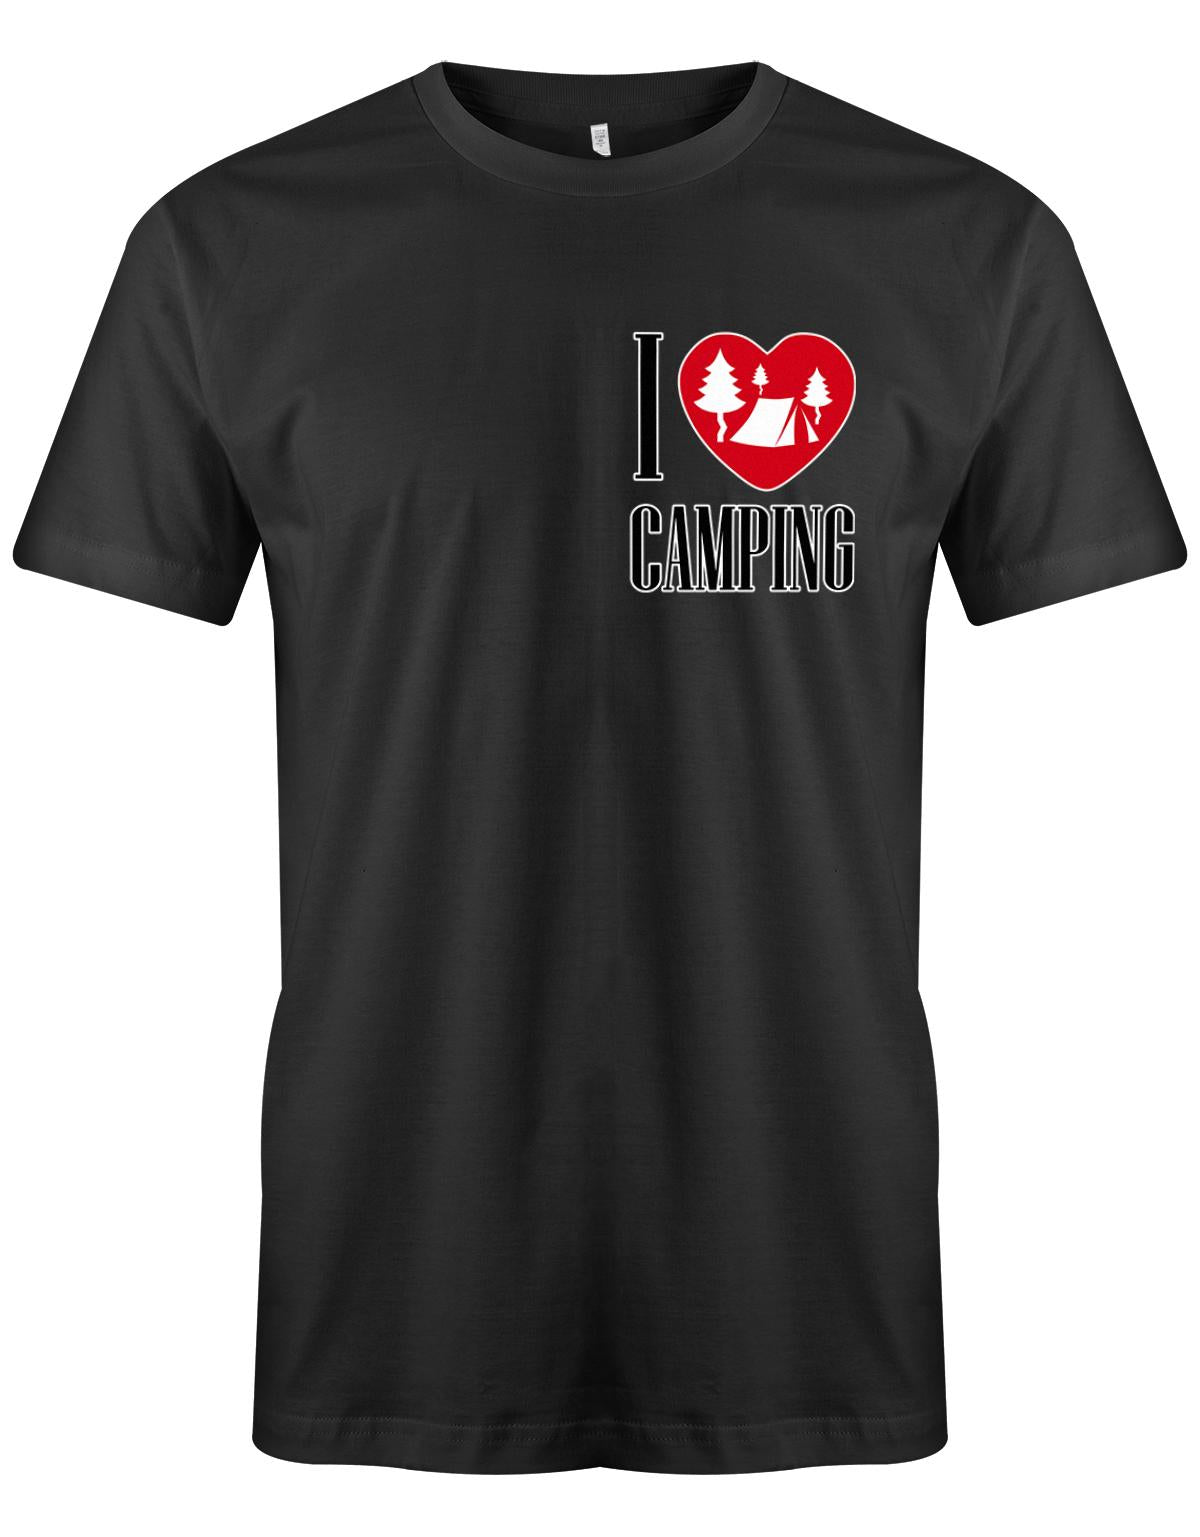 I-love-Camping-Herren-Shirt-schwarz